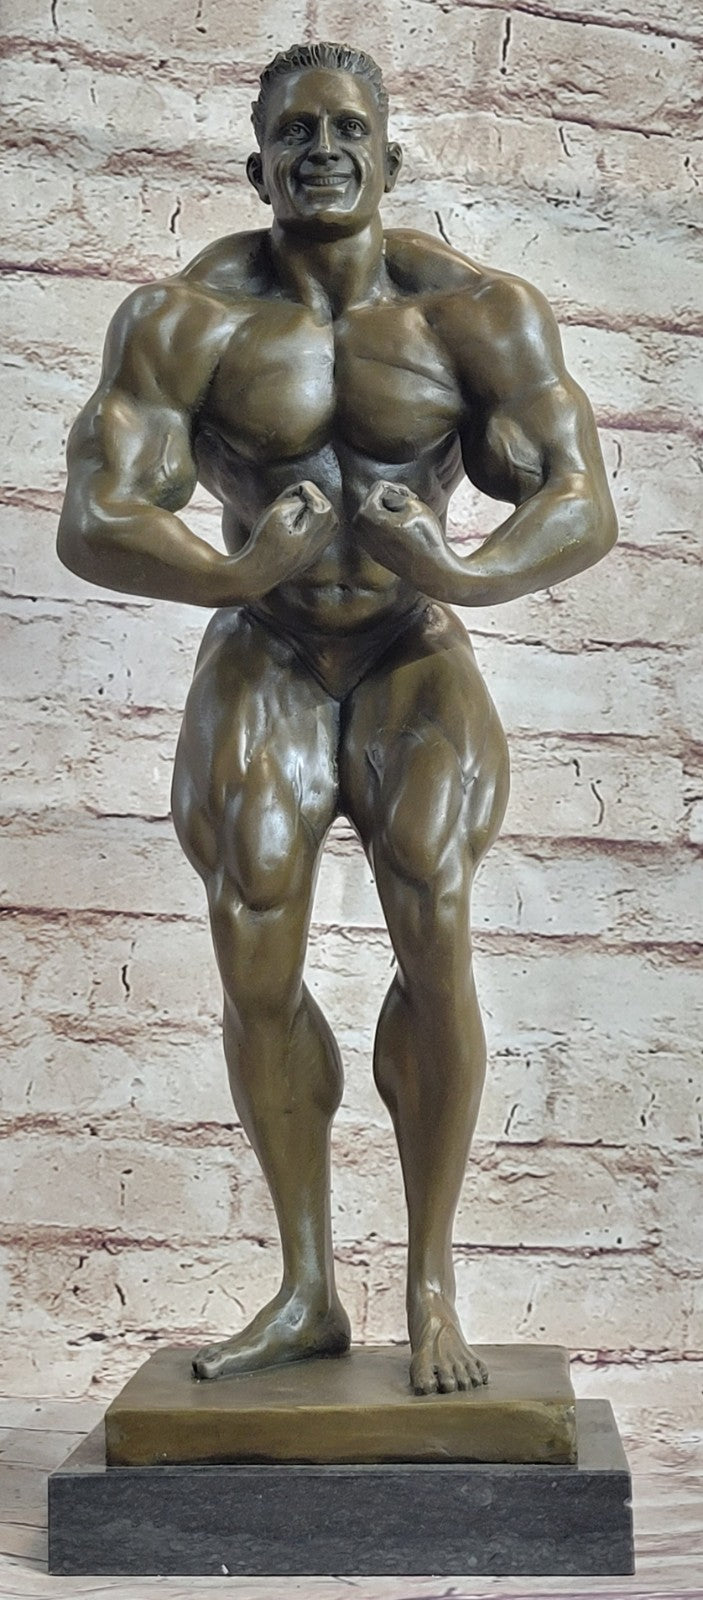 Handcrafted bronze sculpture SALE Marble Man Nude Art Modern Muscular Abstract